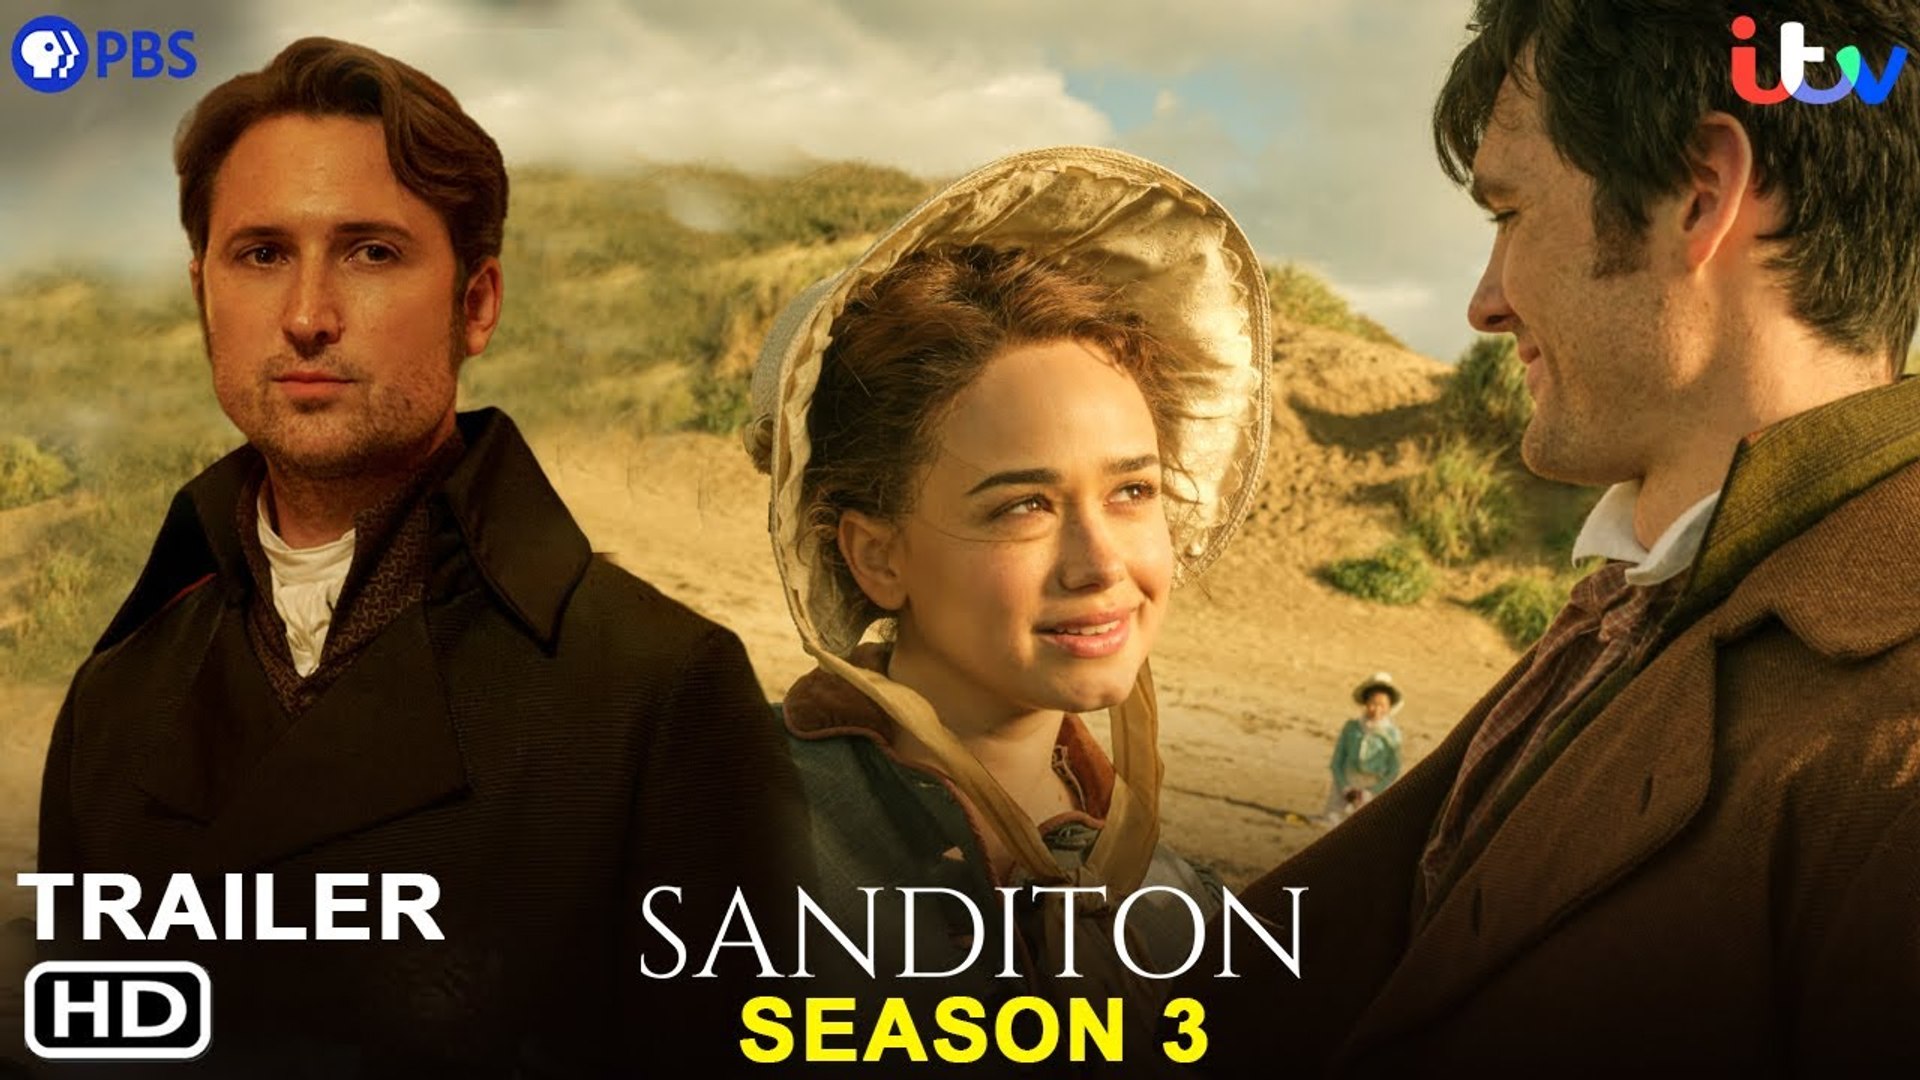 Sanditon Season 3 Trailer - The Final Season PBS, Release Date, Episode 1,  Ending, Spoiler, Cast - video Dailymotion